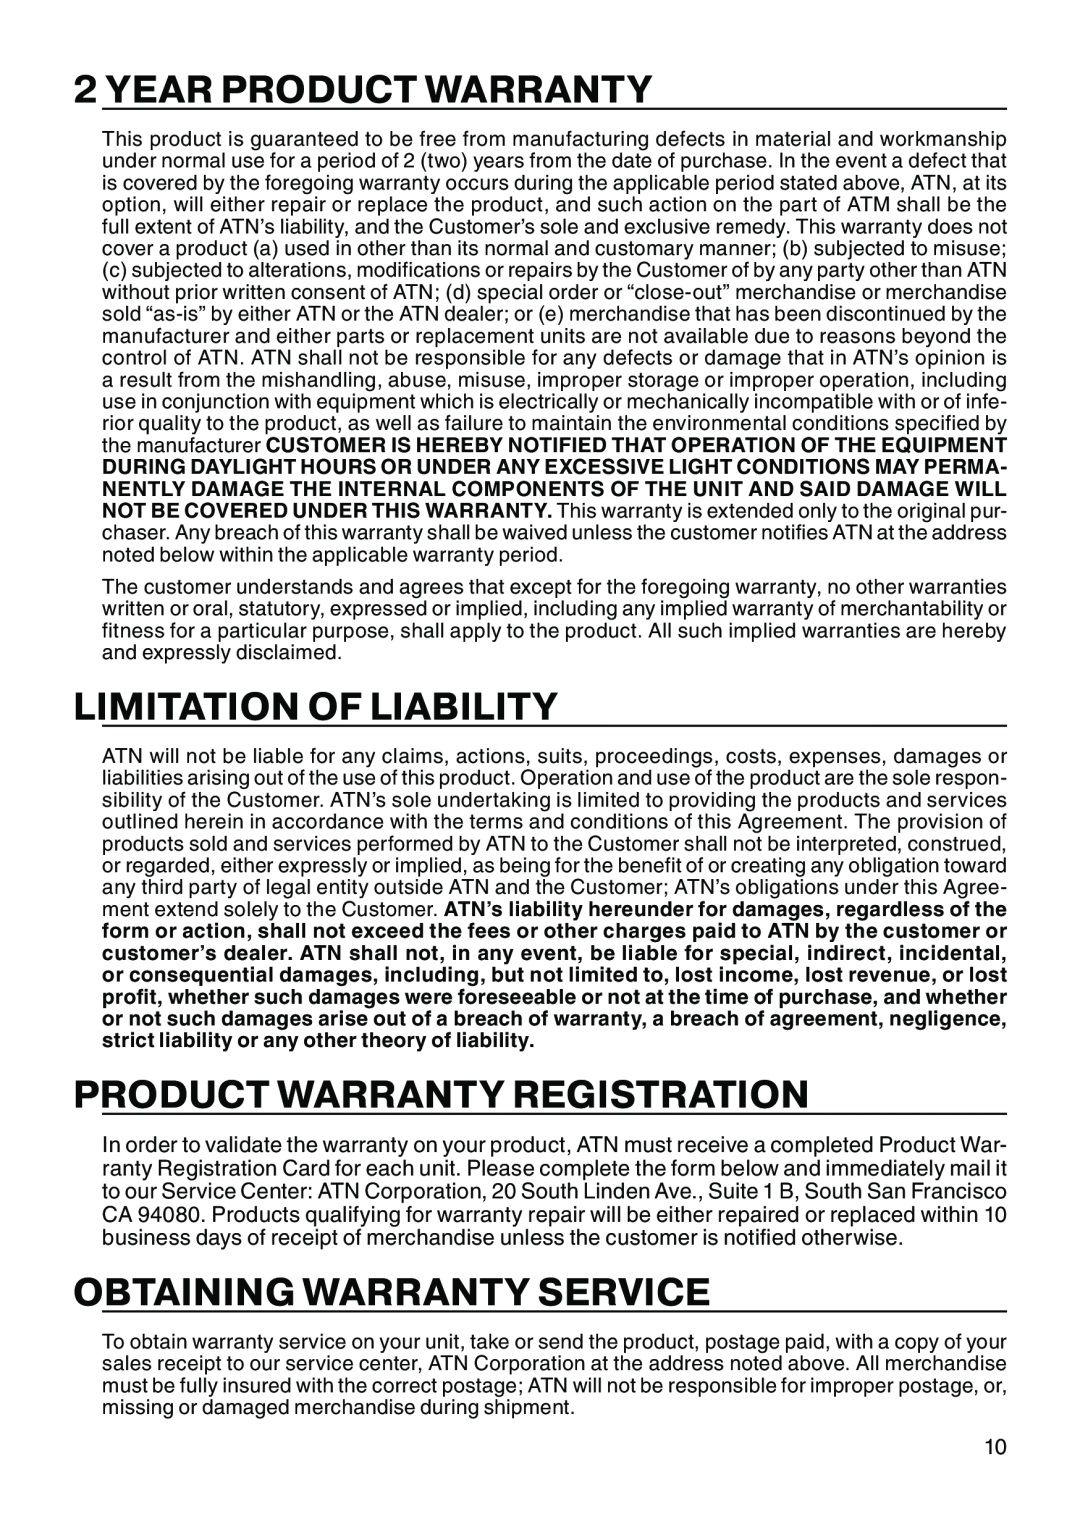 ATN MK 8700 Year Product Warranty, Limitation Of Liability, Product Warranty Registration, Obtaining Warranty Service 